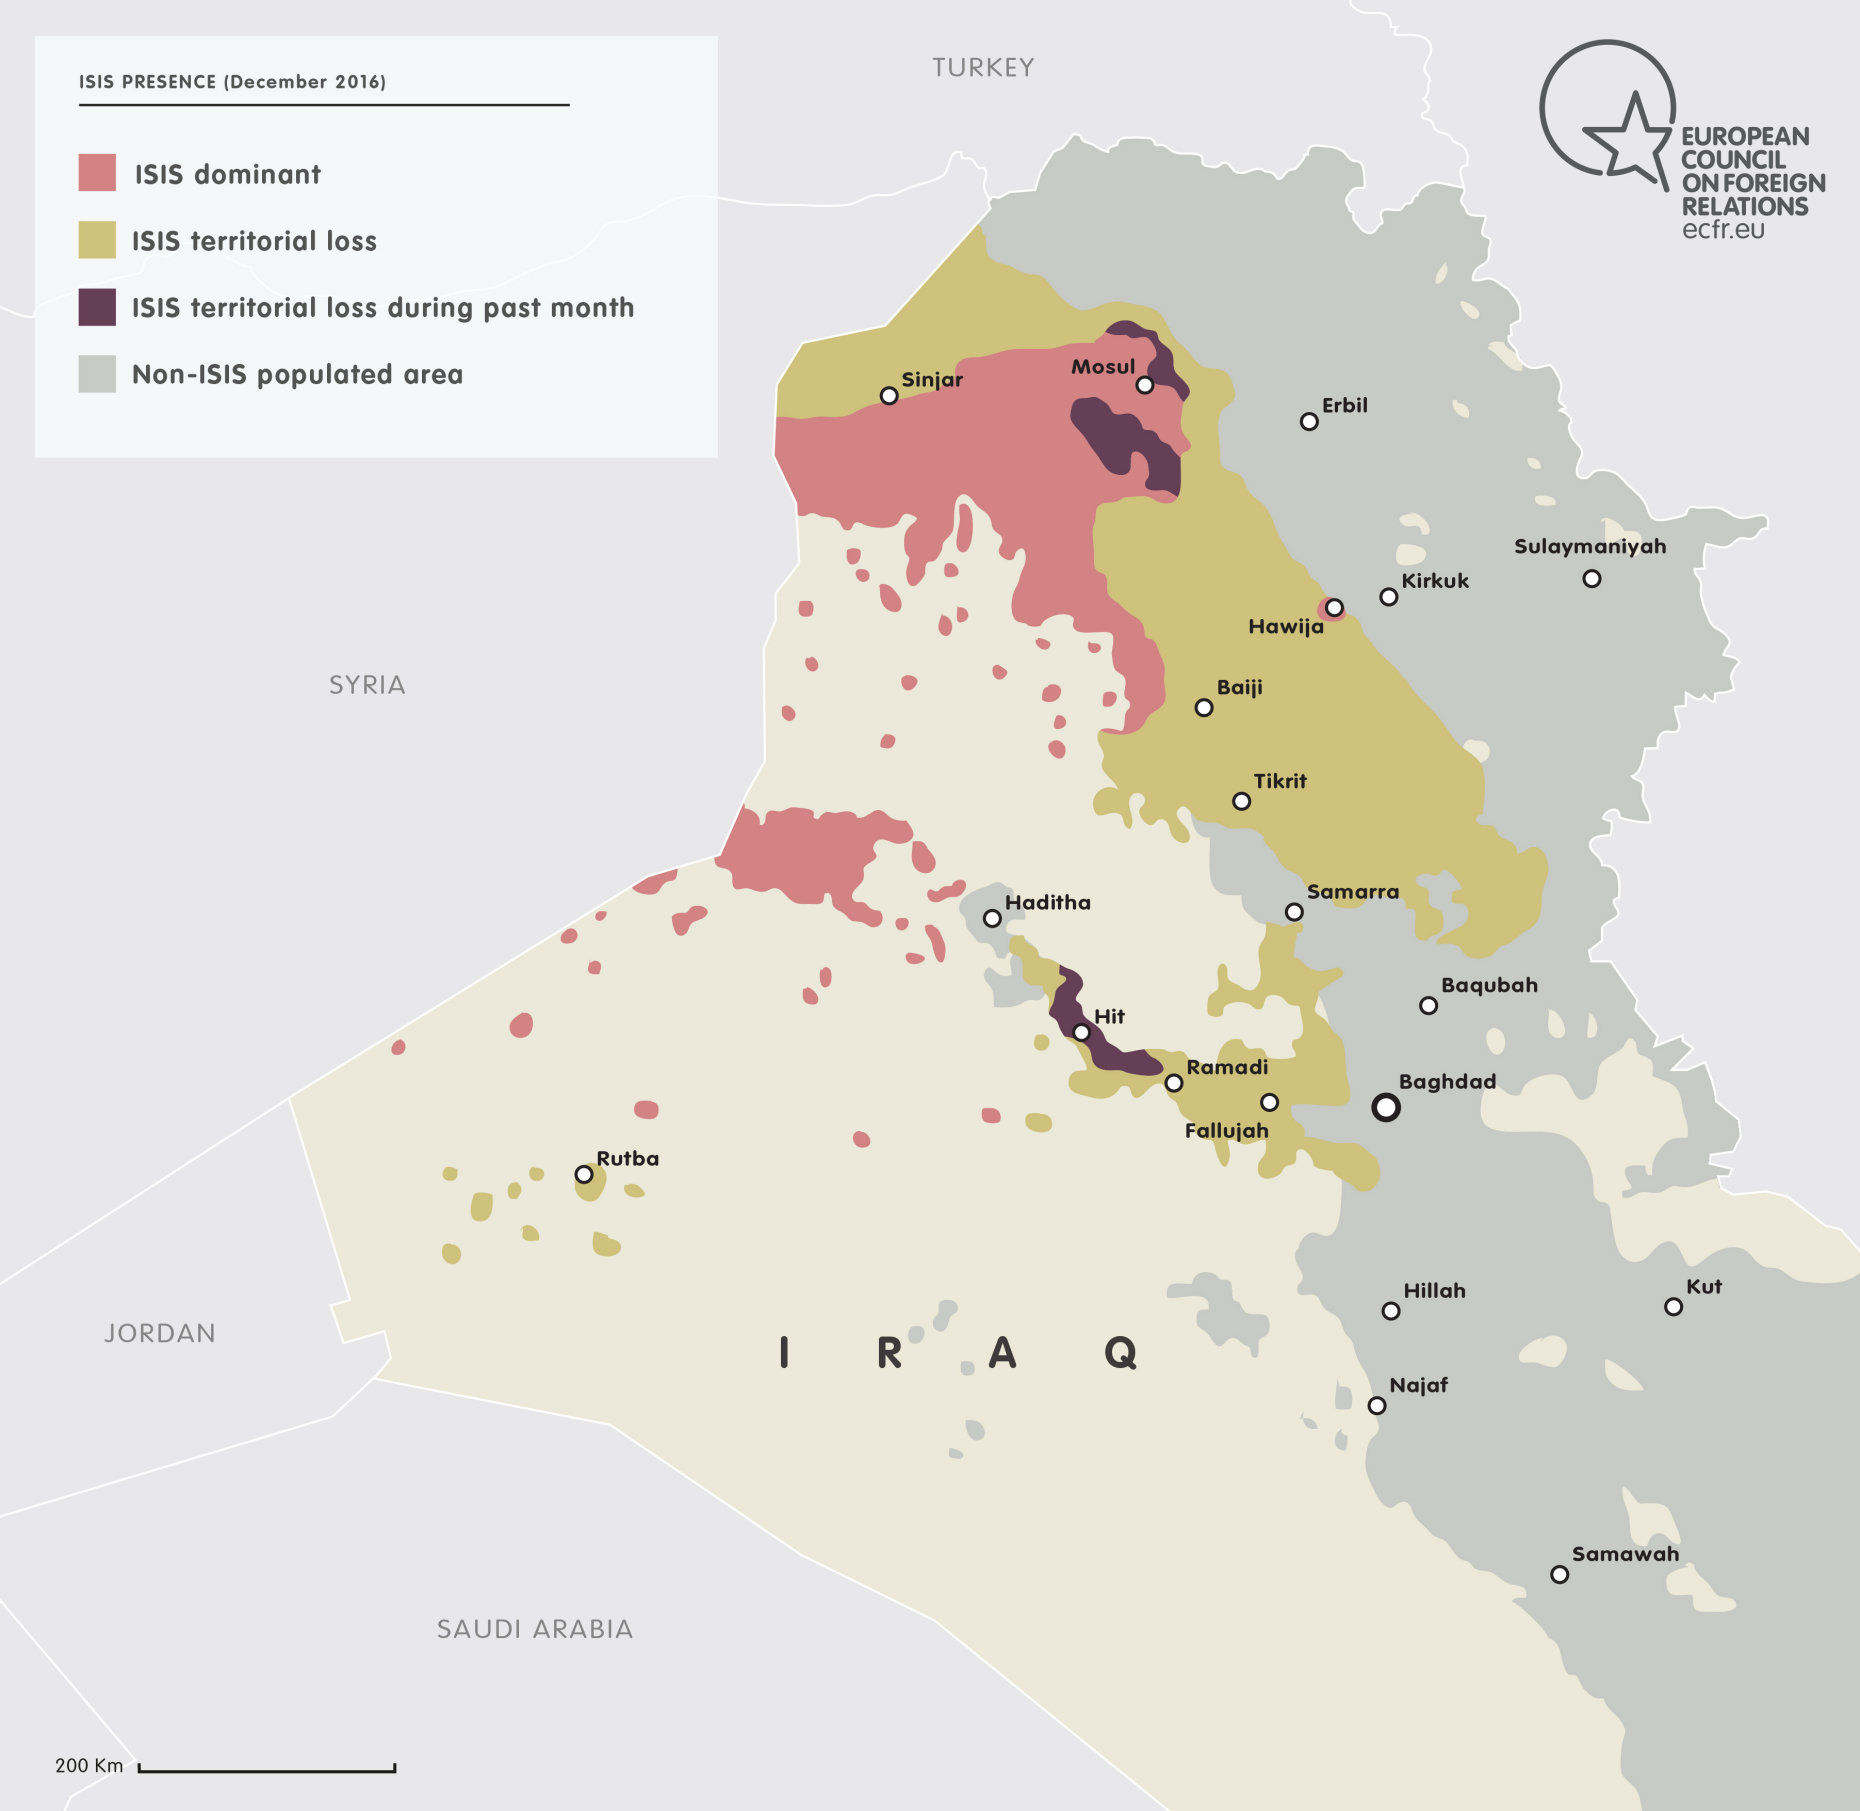 ISIS Presence (December 2016)